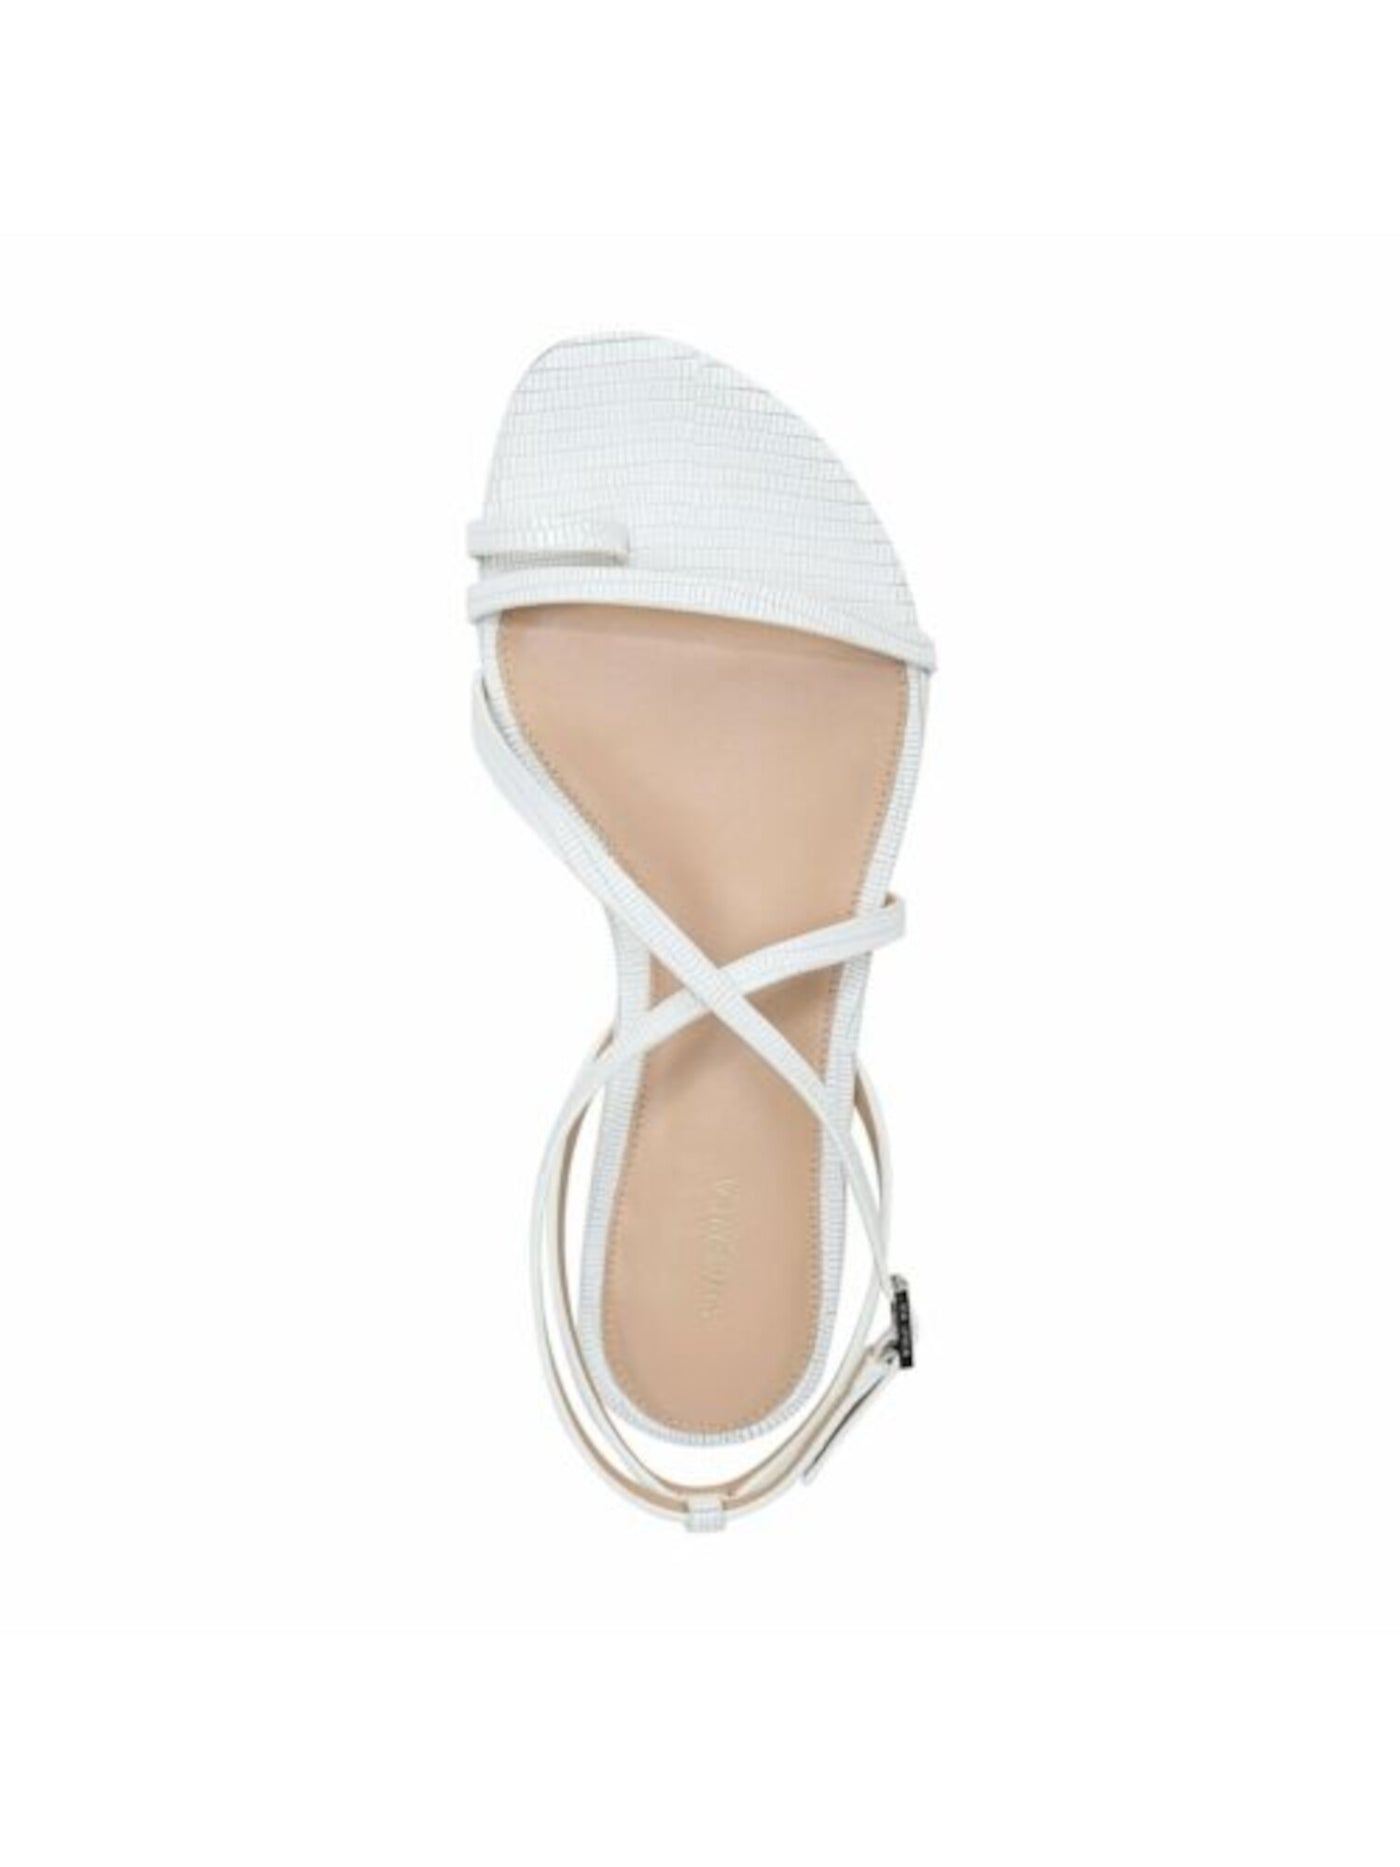 VIA SPIGA Womens White Croc Toe-Loop Strappy Padded Calandre Round Toe Buckle Leather Slingback Sandal 8 M